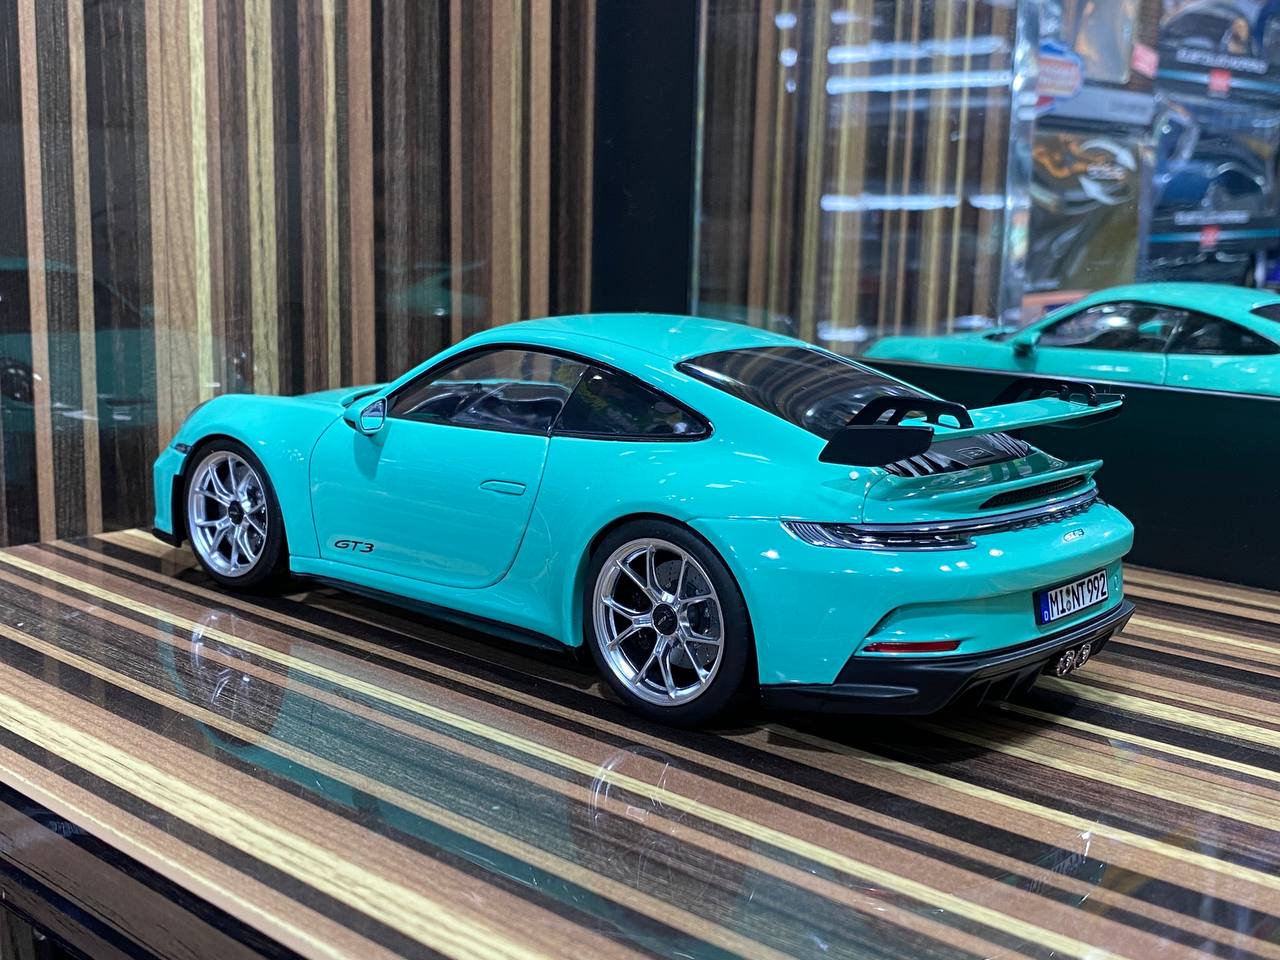 1/18 Diecast Porsche 911 GT3 Norev Scale Model Car